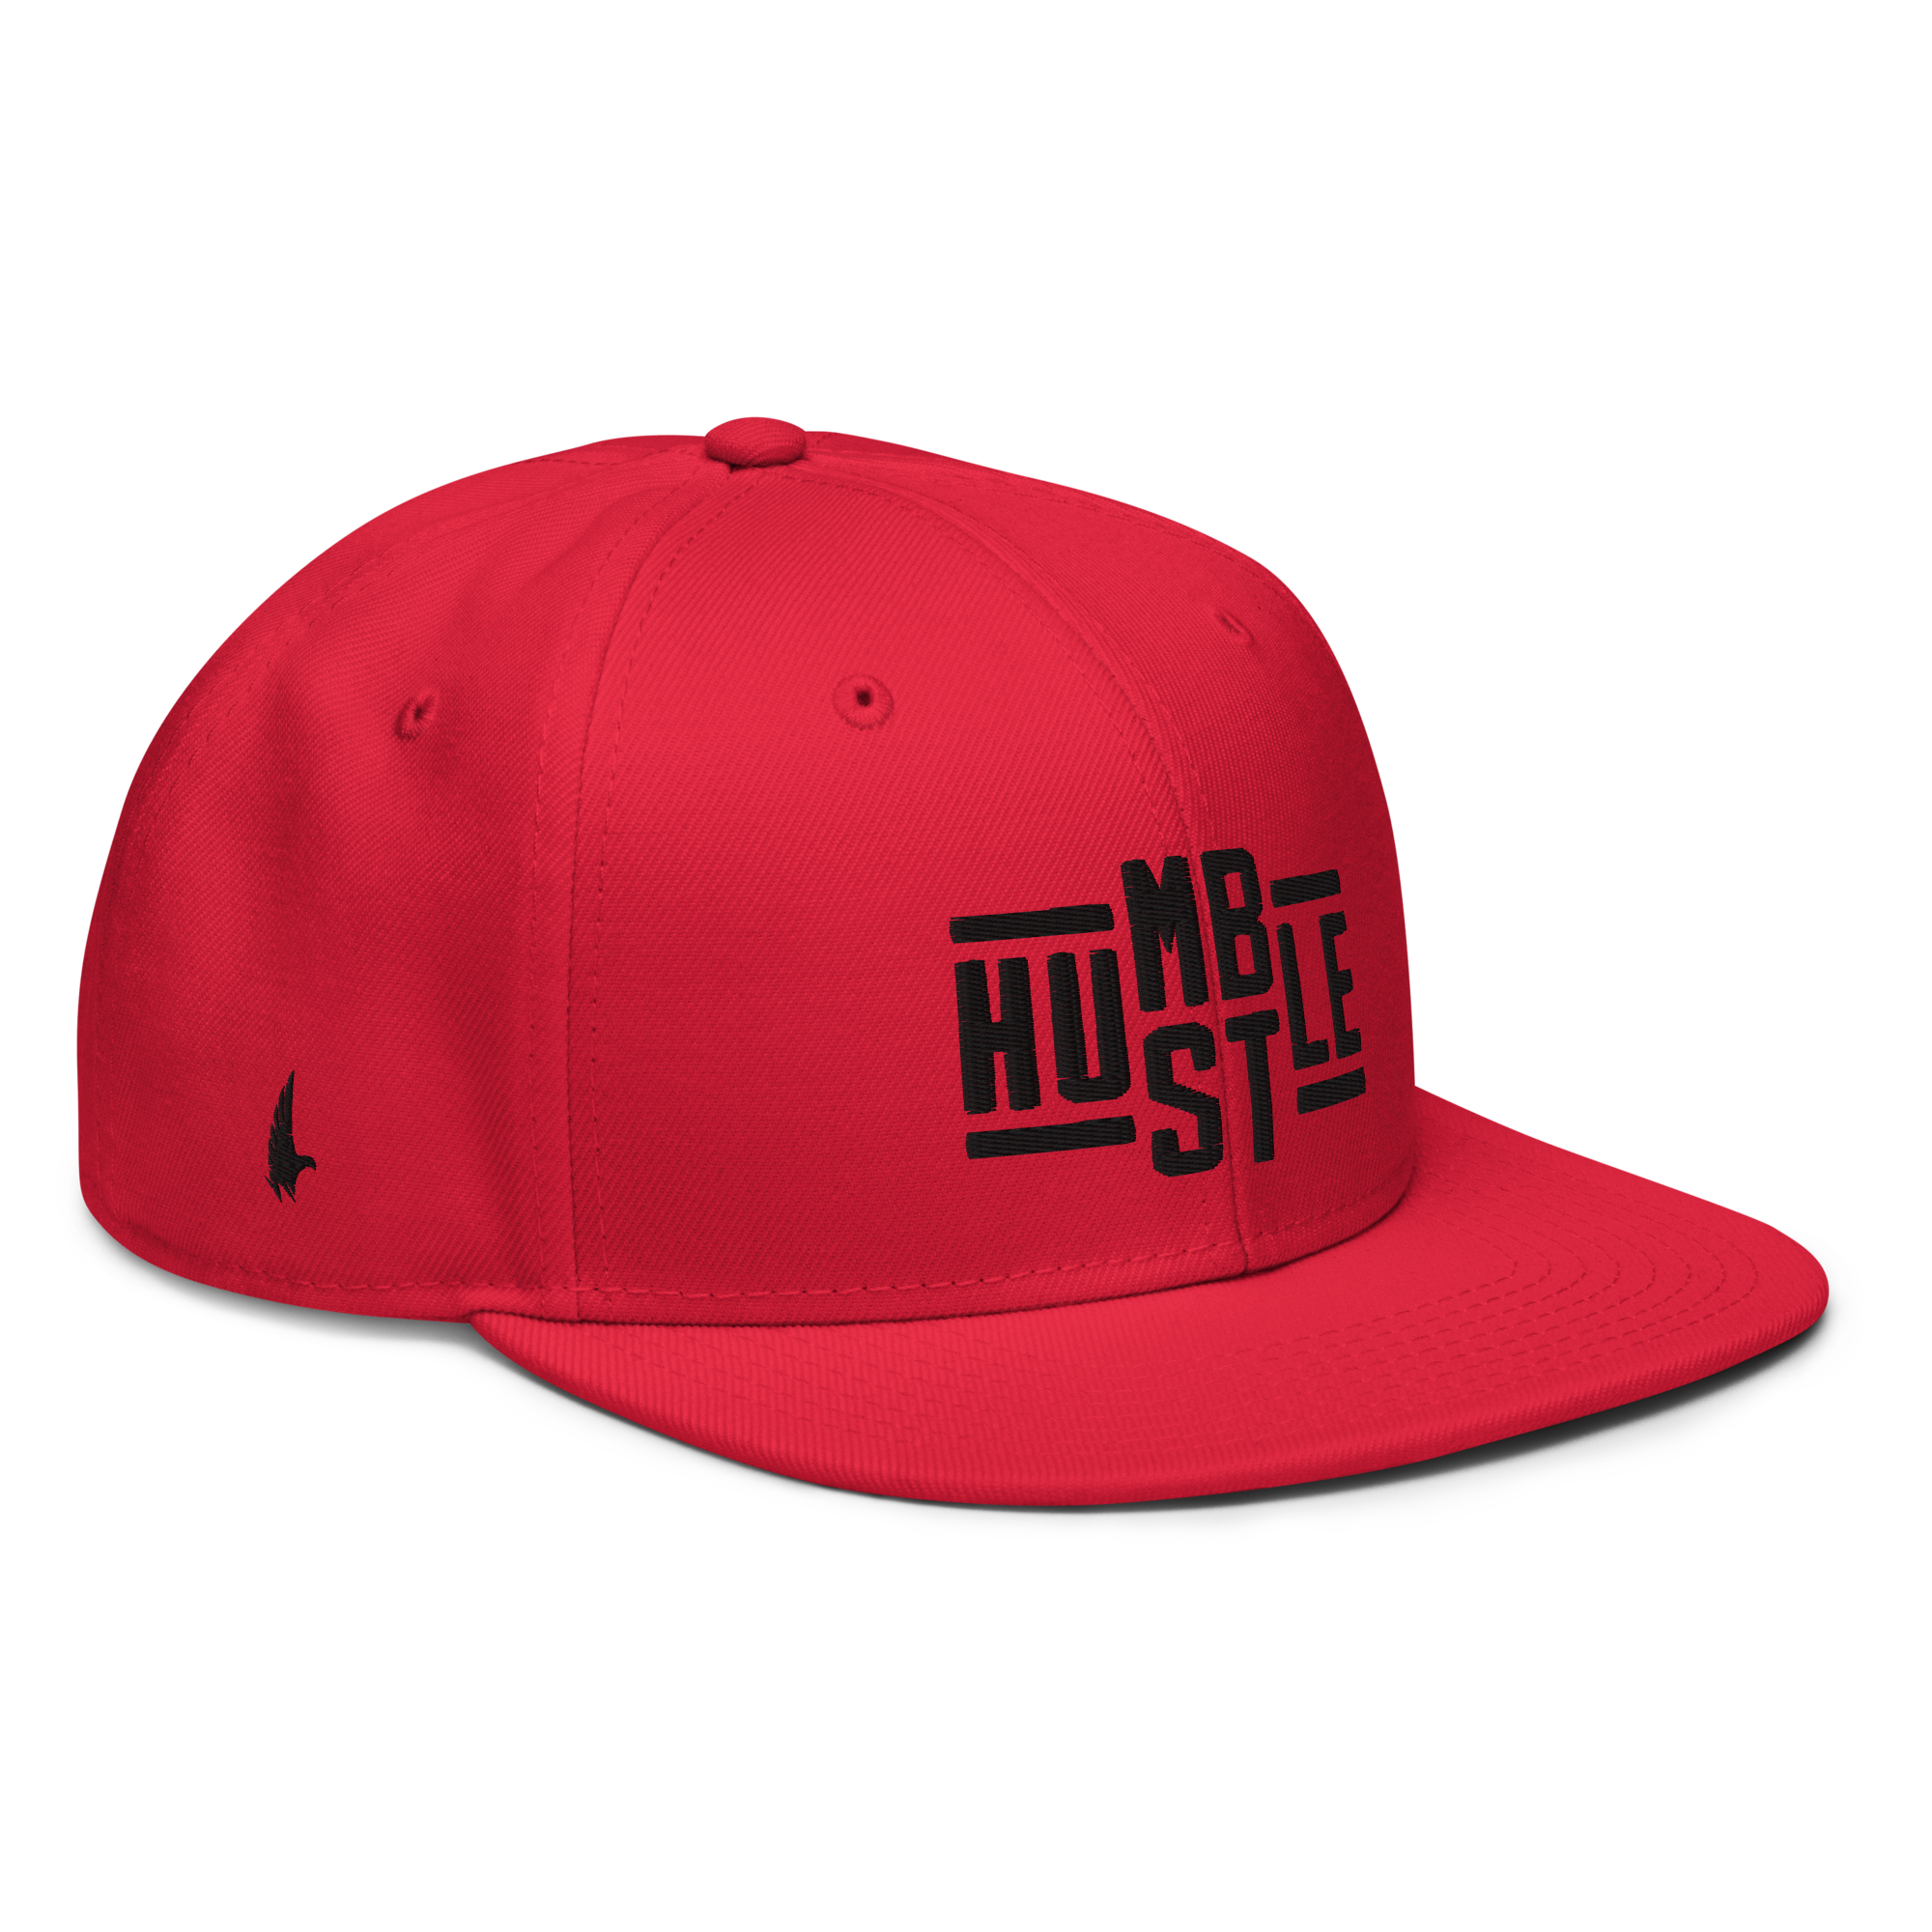 Hustle Snapback Hat - Red/Black OS - Loyalty Vibes